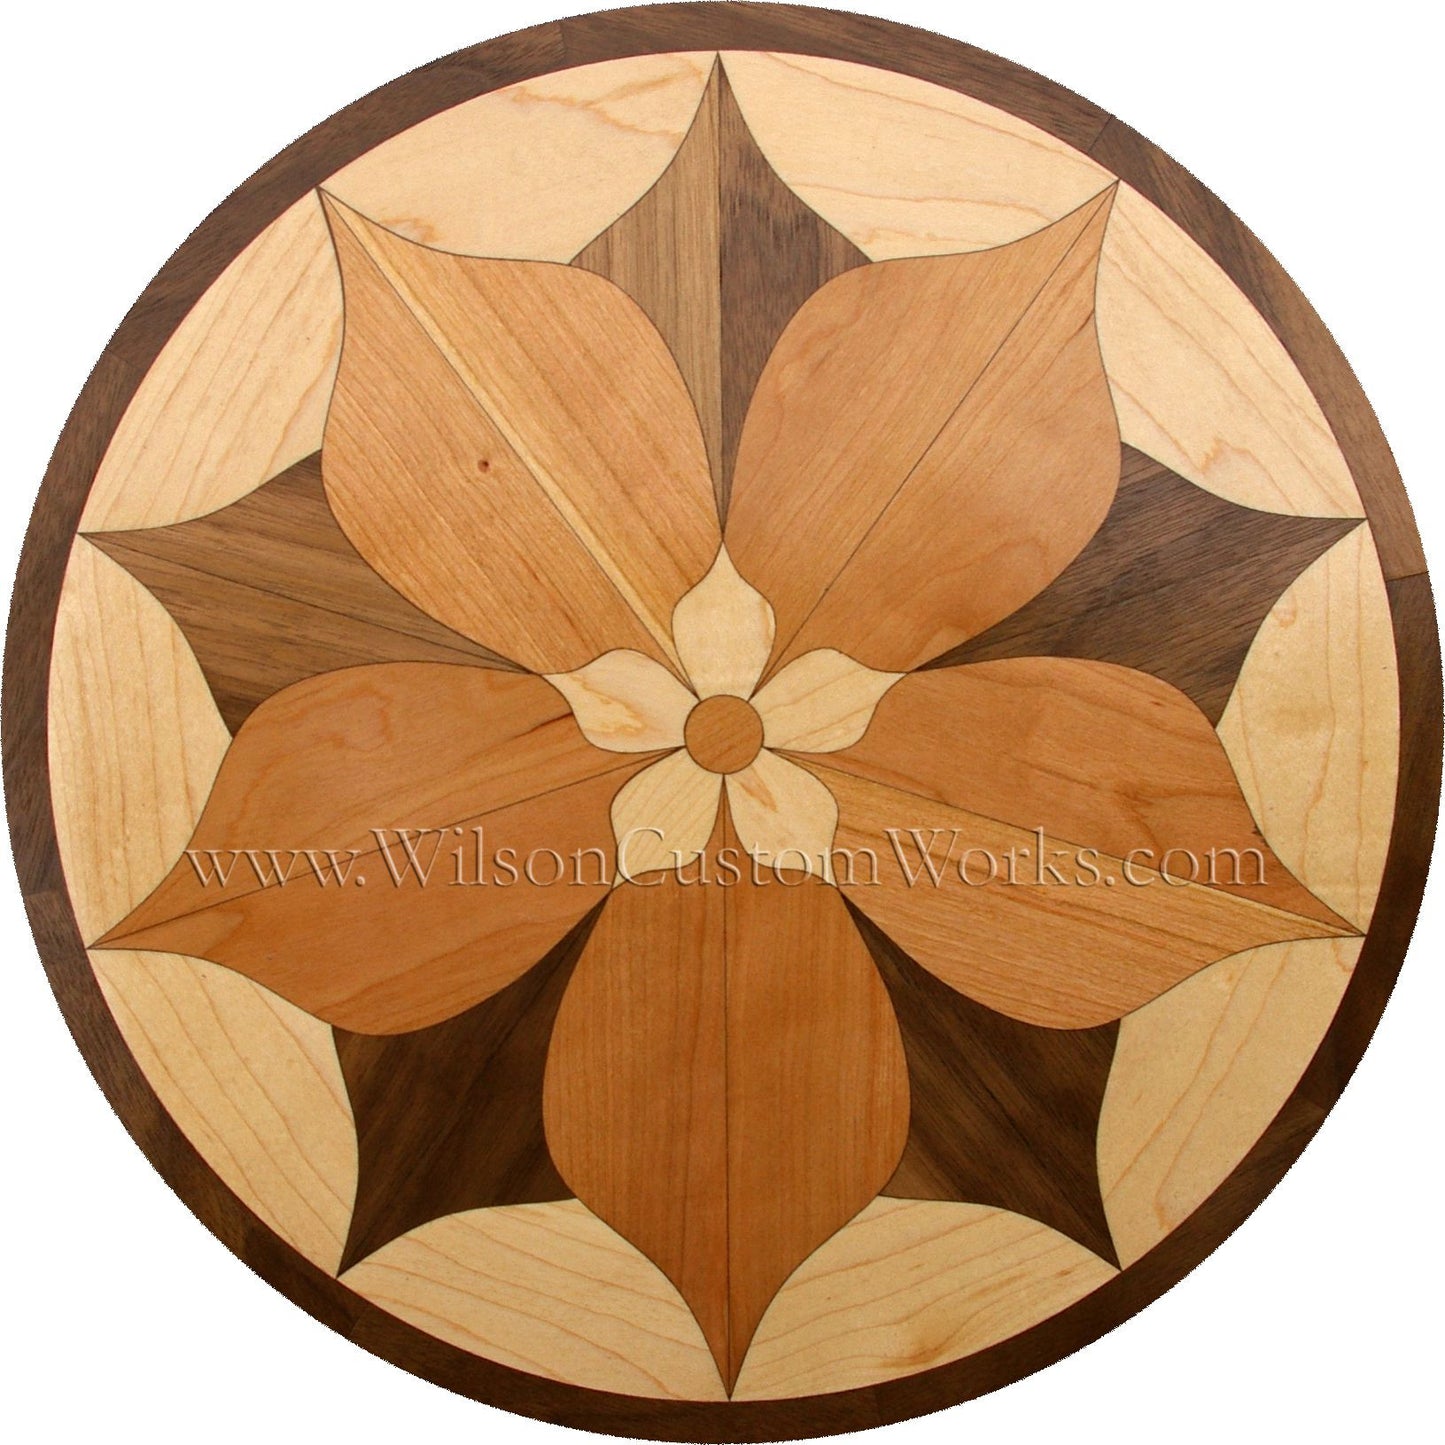 Wilson Custom Works hardwood wood floor inlay medallion spring flower design